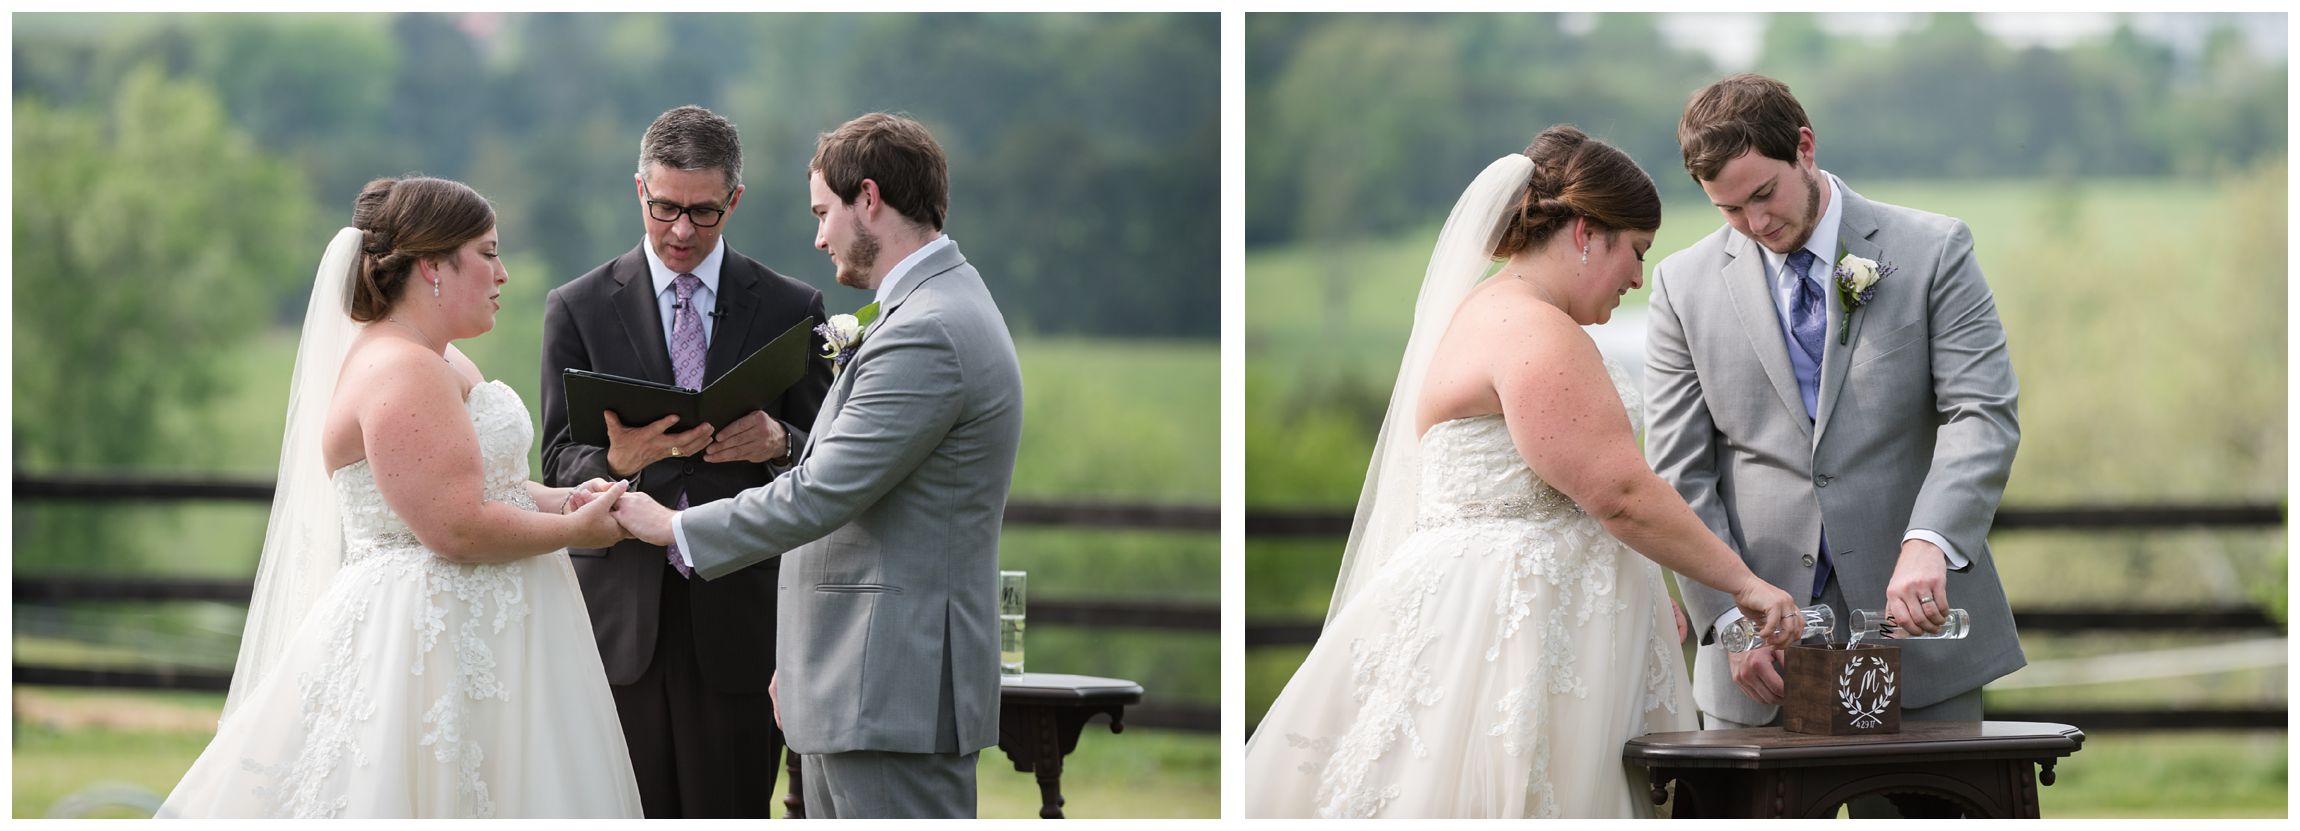 bride and groom during wedding at Wolftrap Farm in Gordonsville, Virginia